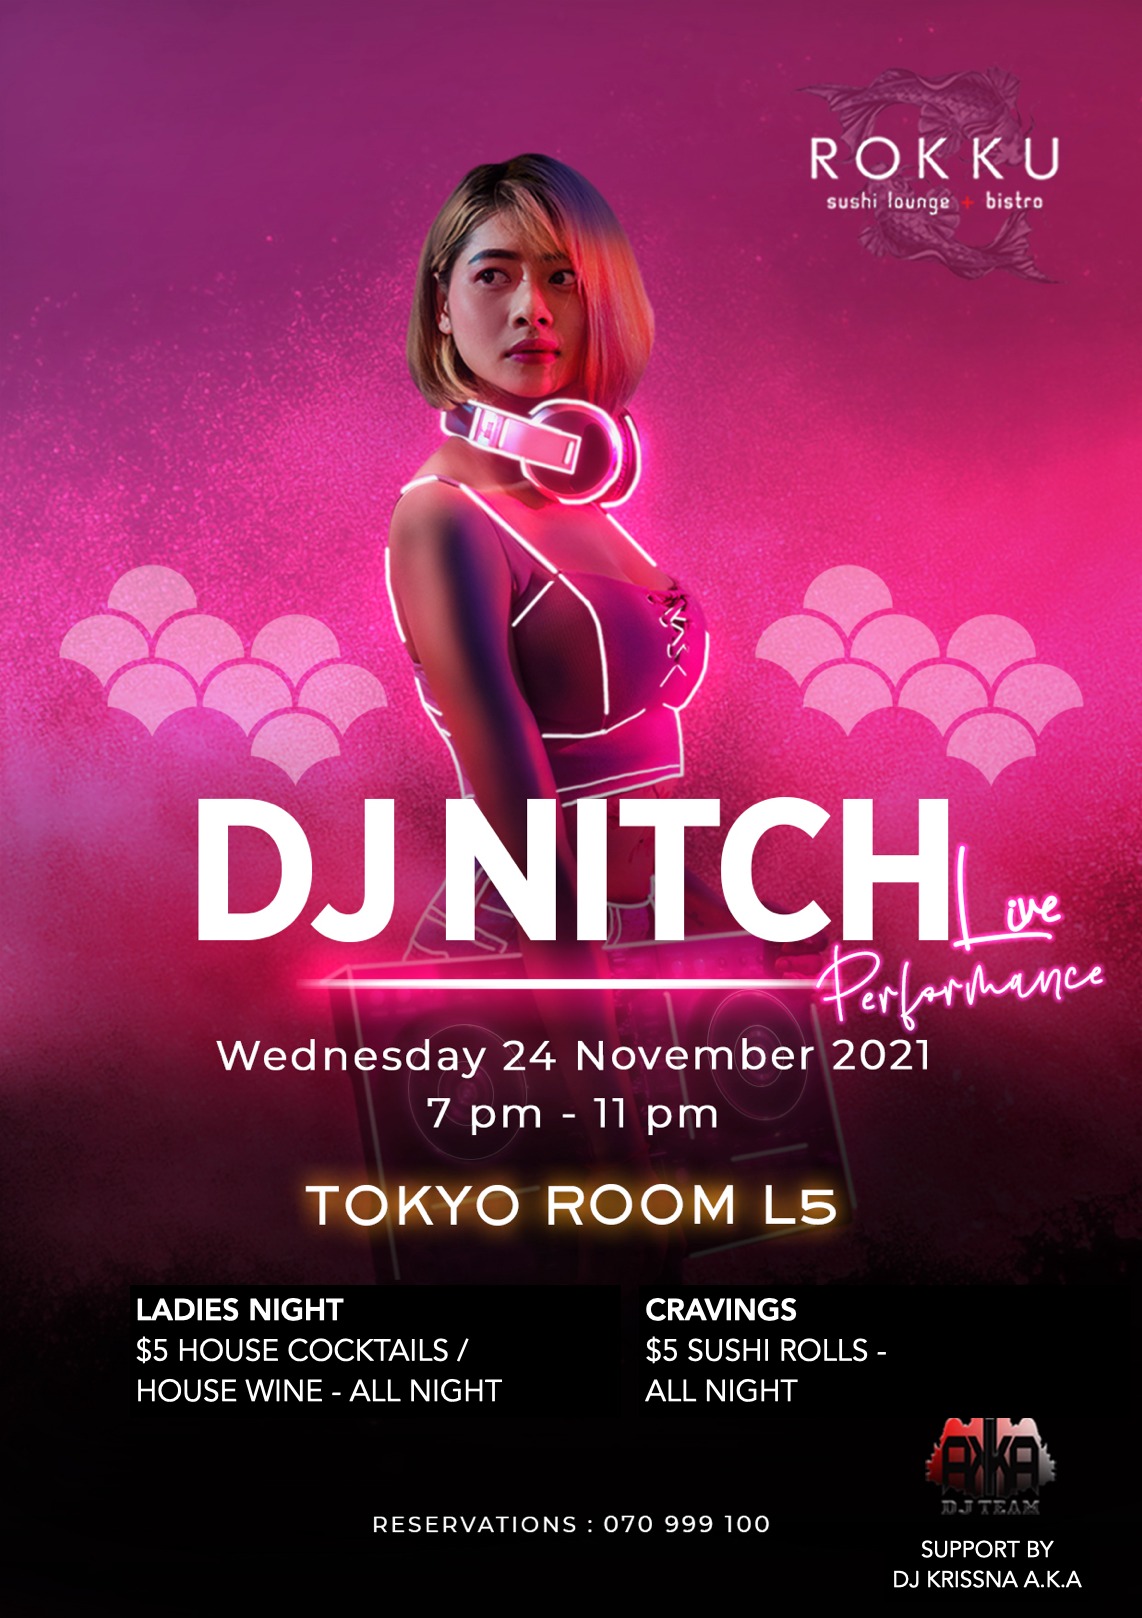 DJ NITCH LIVE PERFORMANCE AT ROKKU ON NOVEMBER 24TH